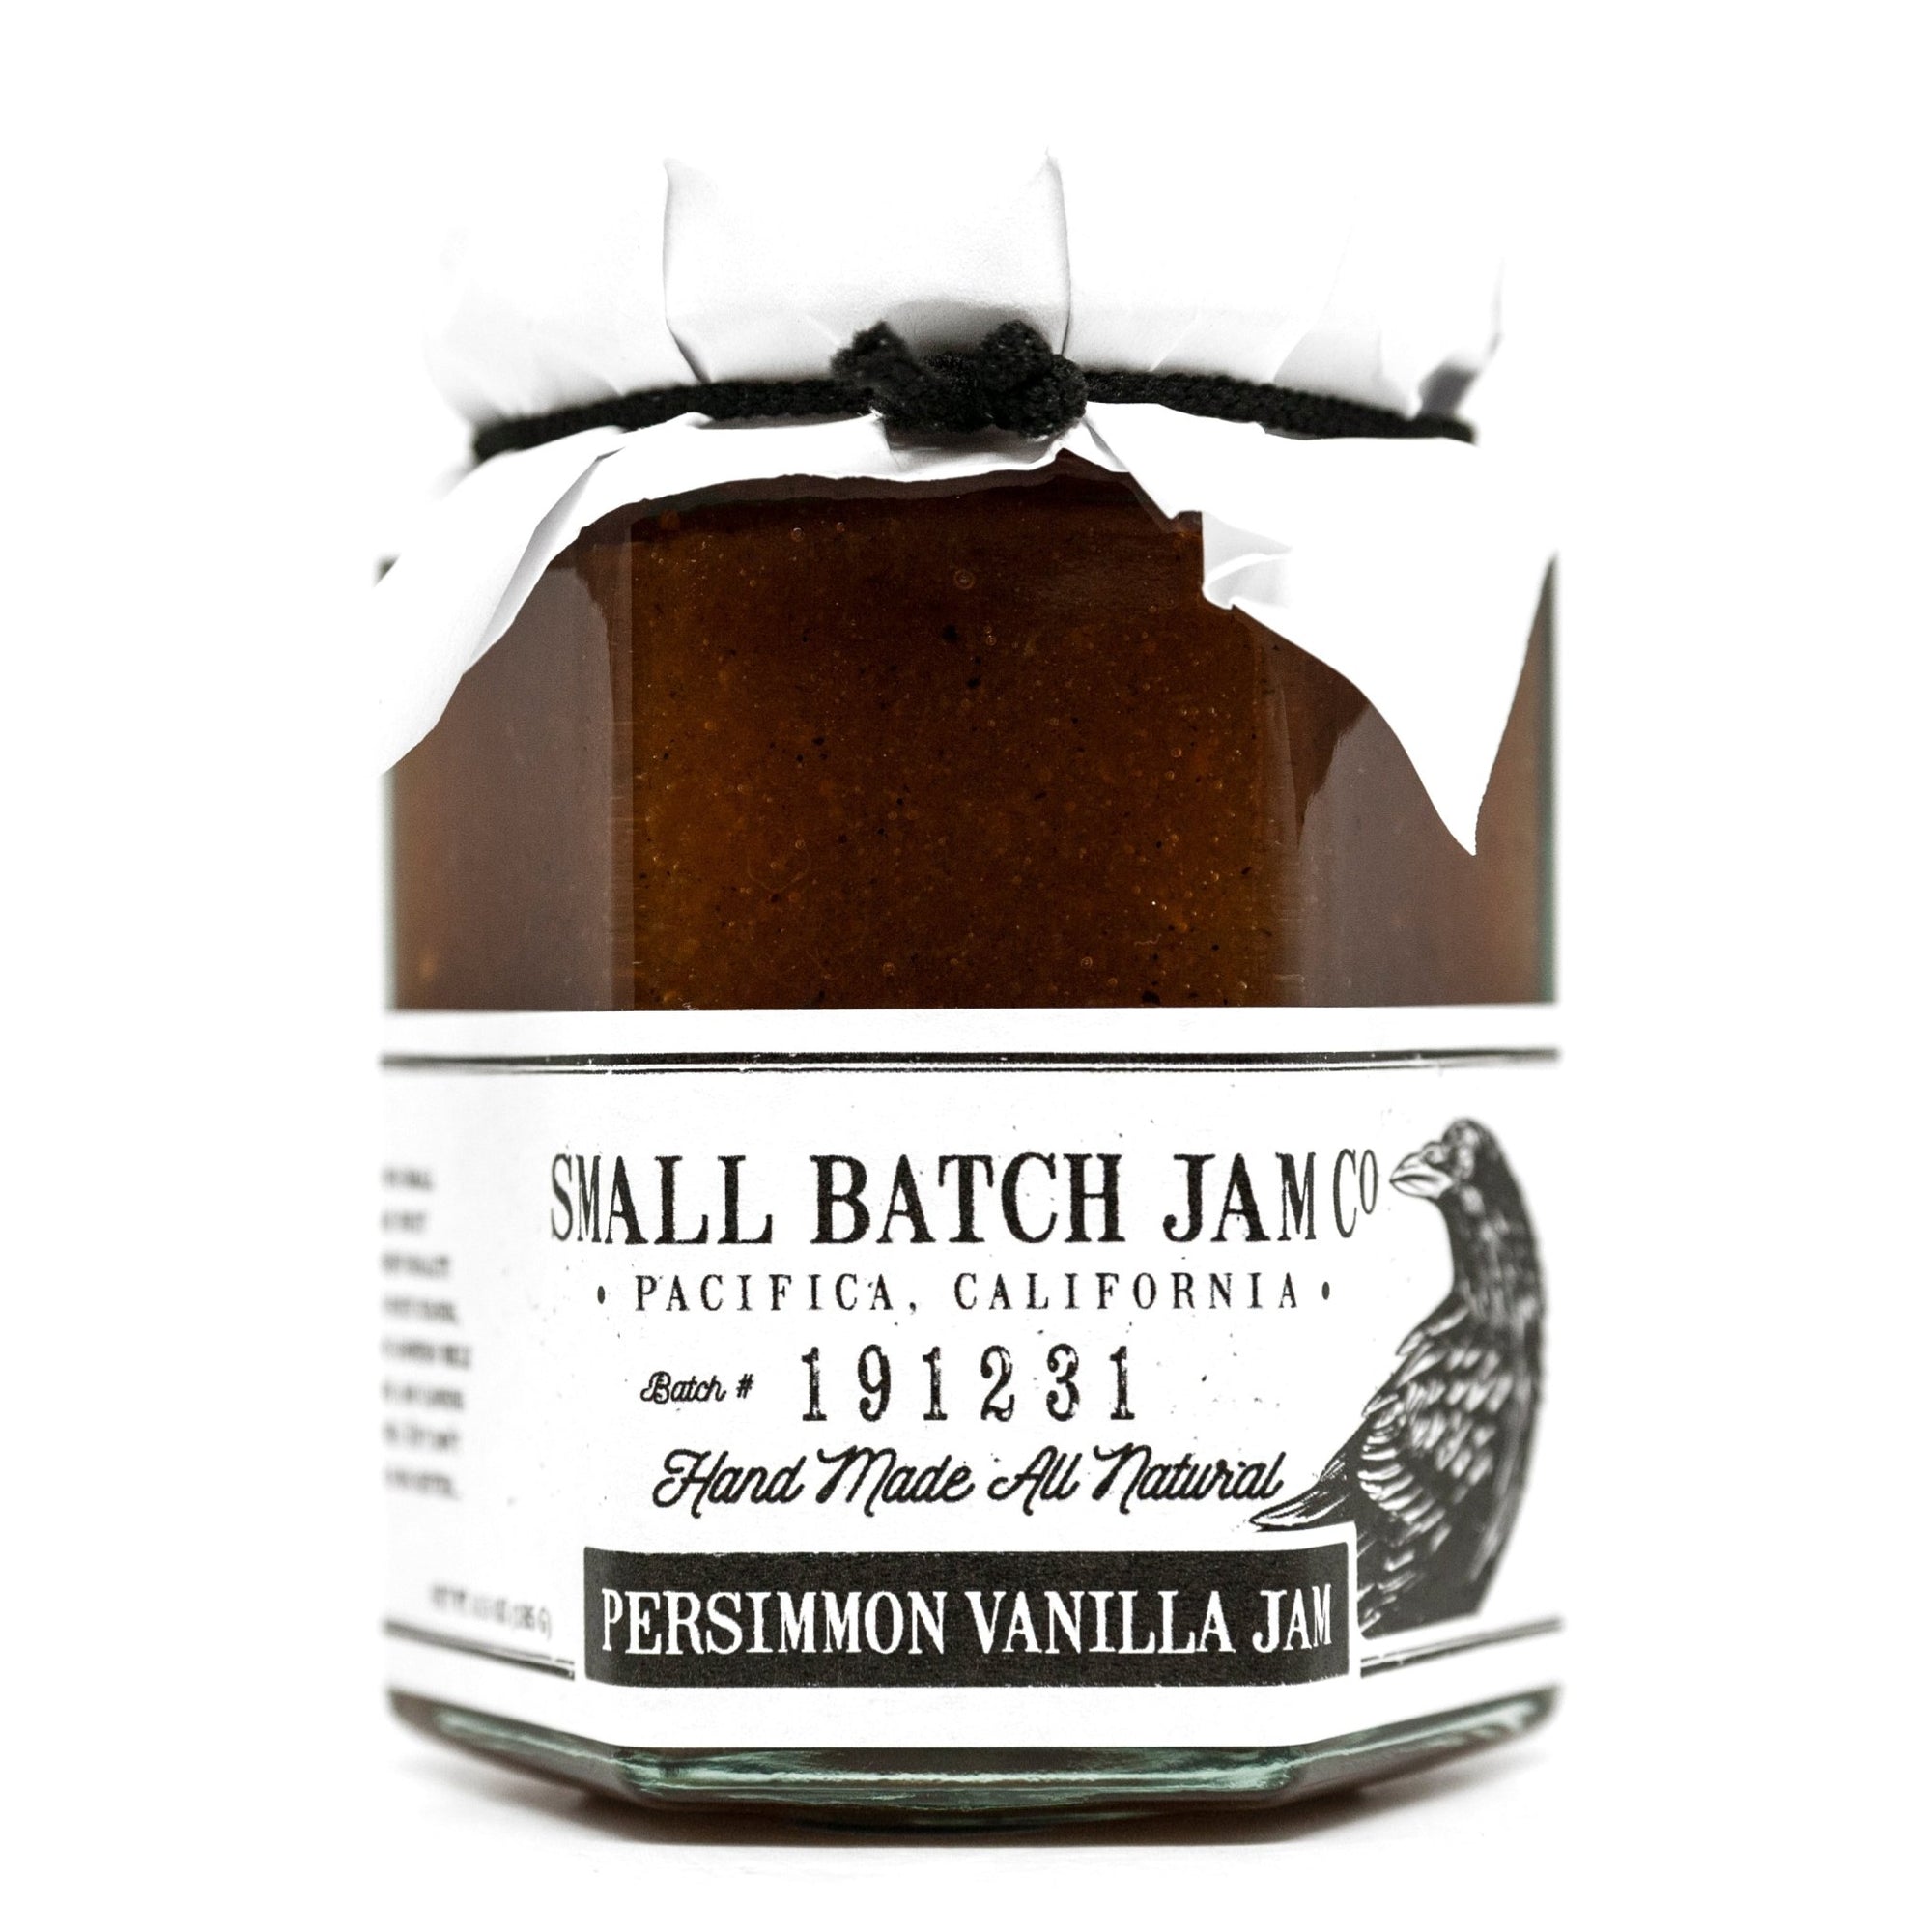 Persimmon Vanilla Jam - Small Batch Jam Co